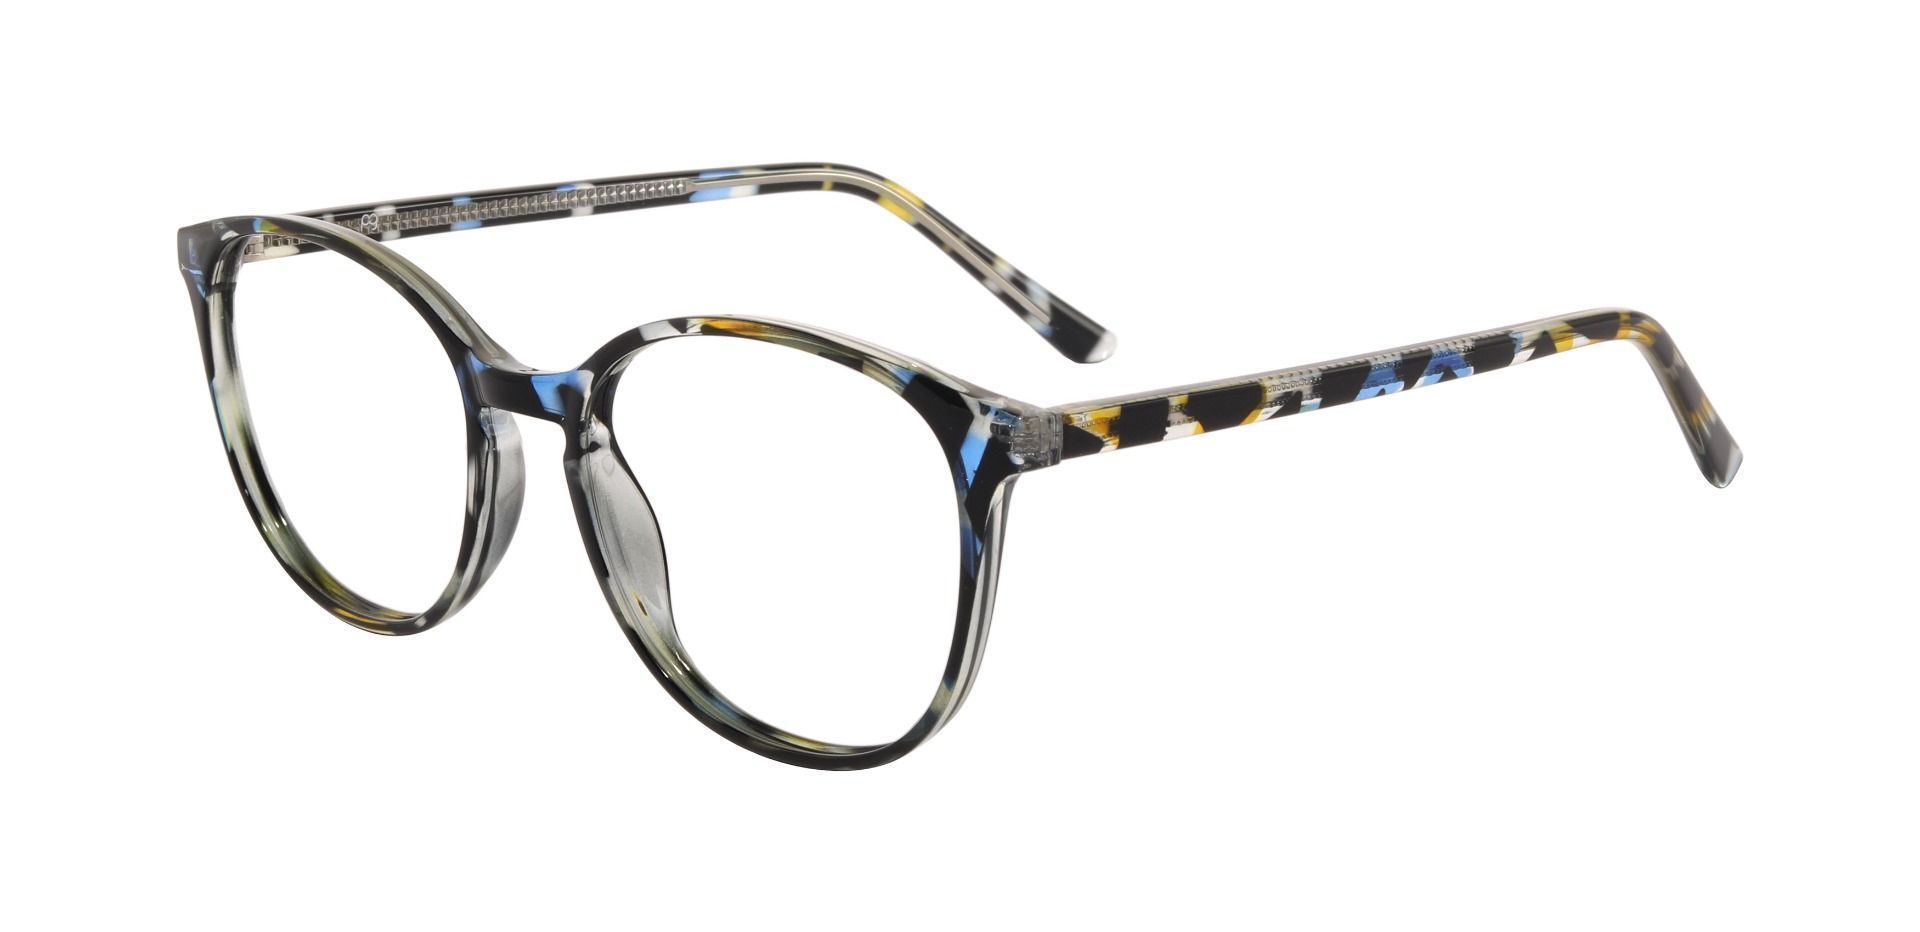 Shanley Oval Progressive Glasses - Two